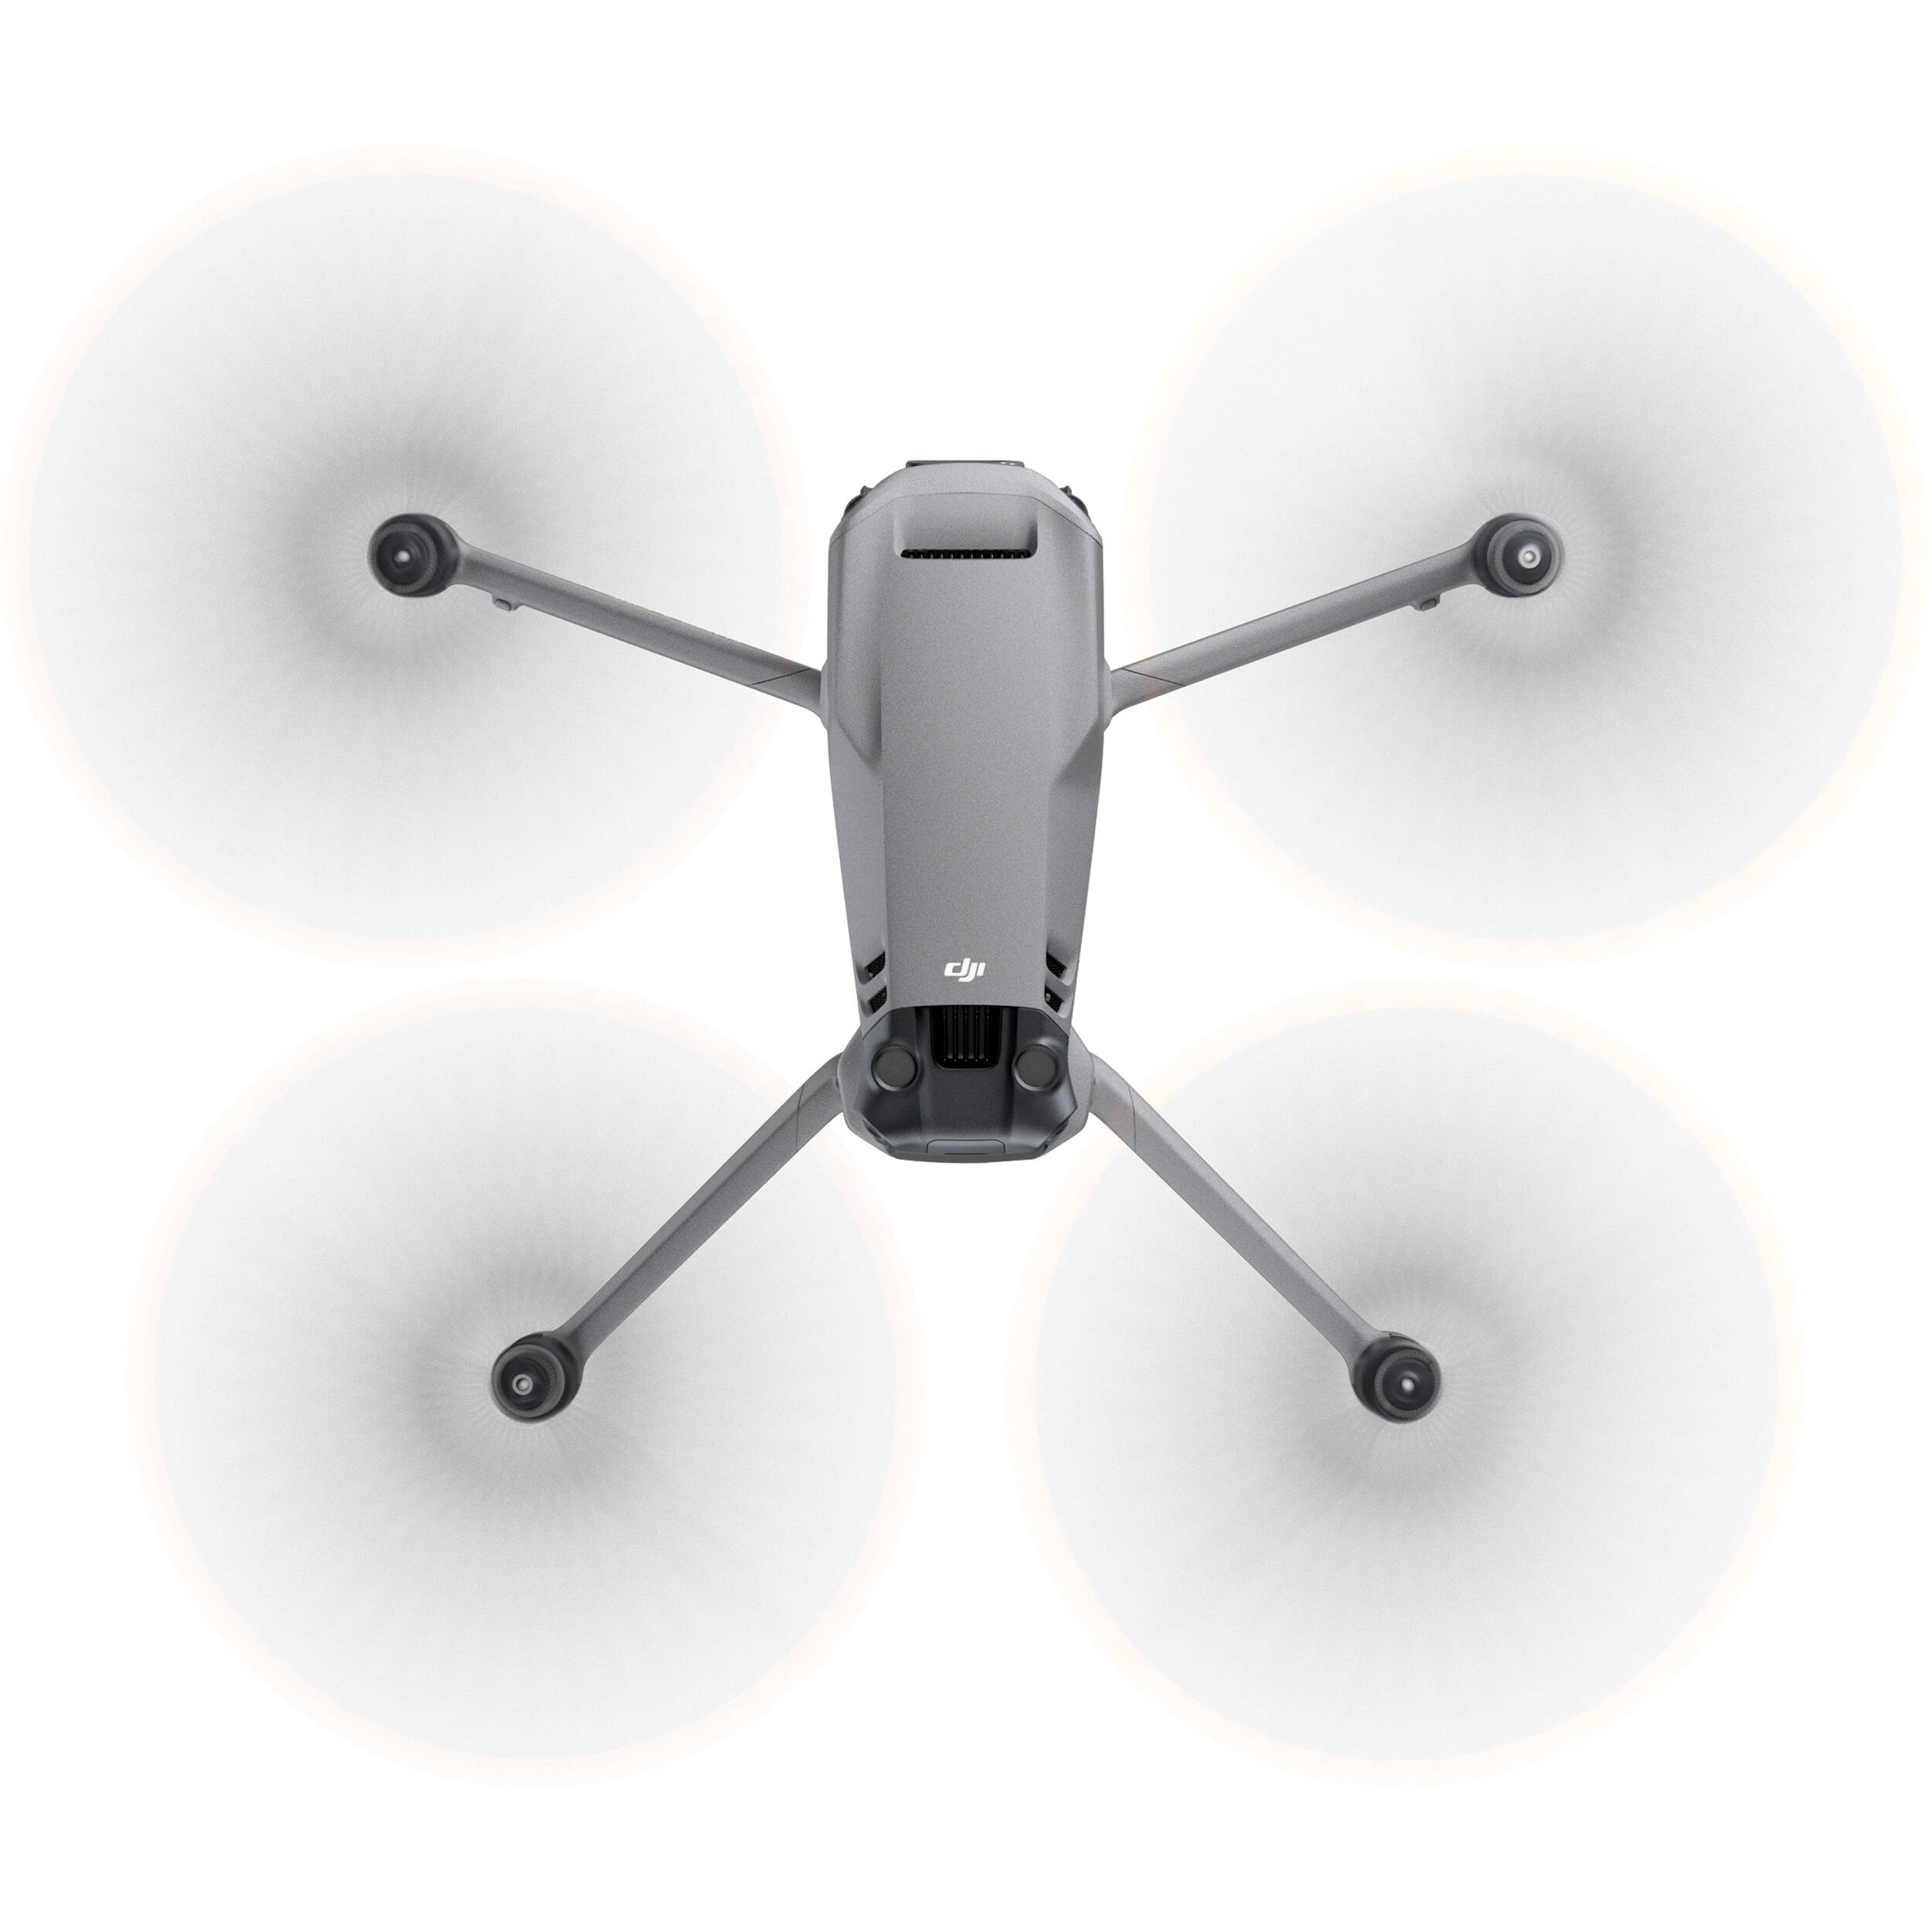 DJI Mavic 3 Drone - Standalone